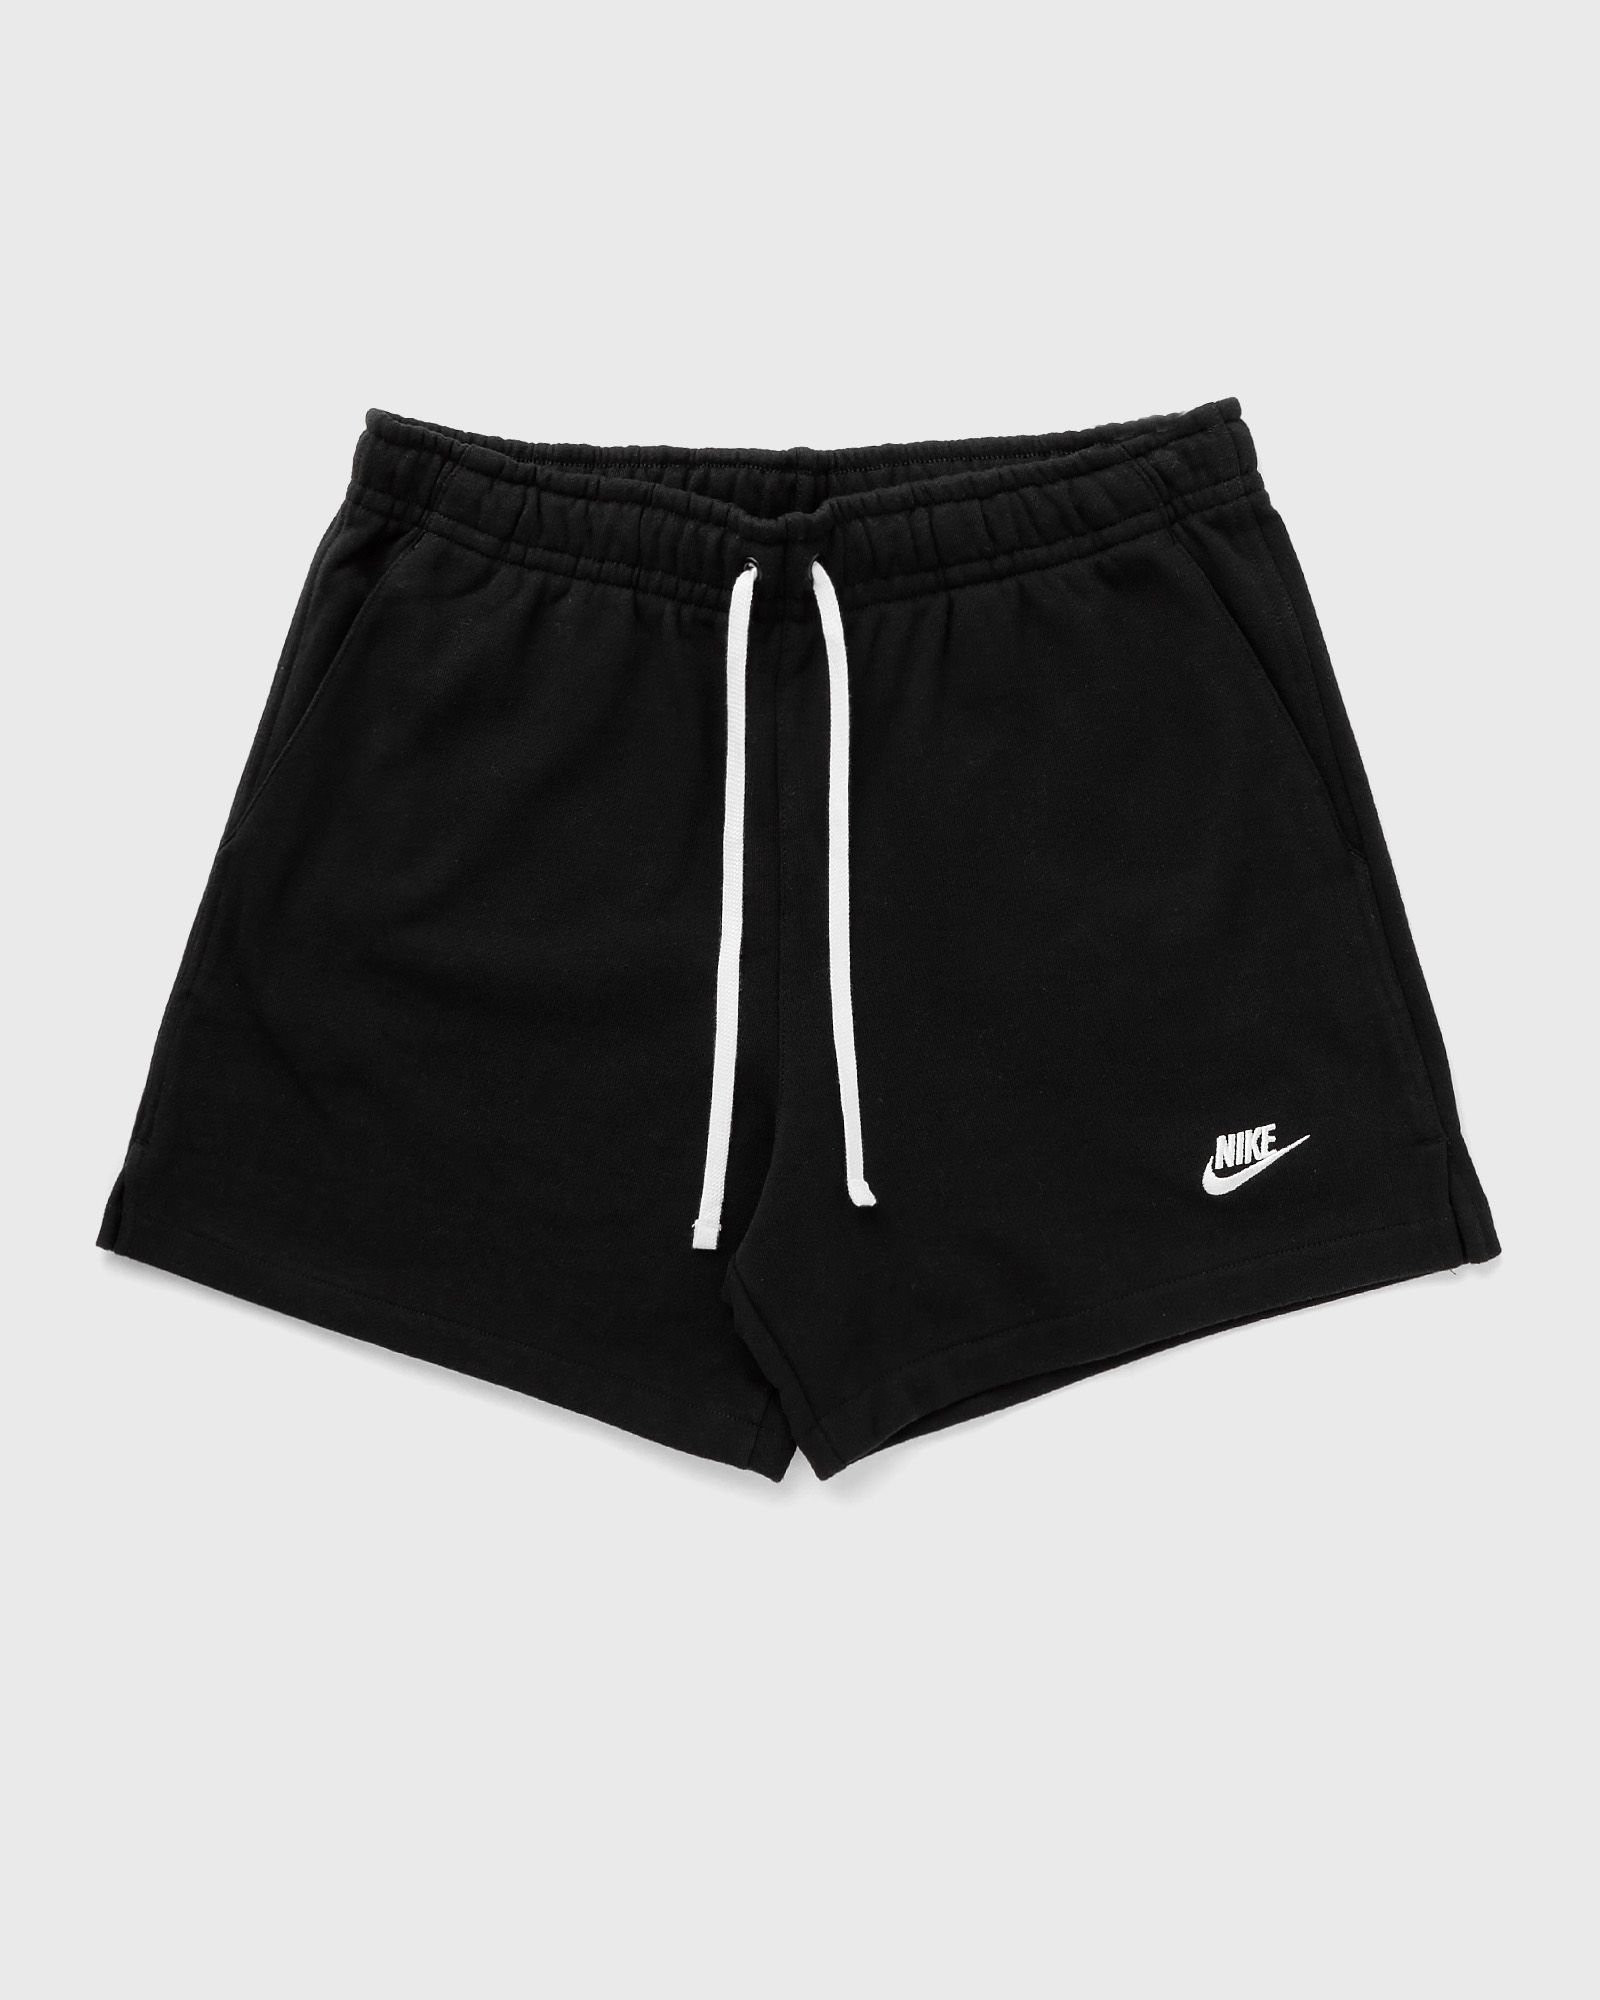 Nike - club french terry flow shorts men sport & team shorts black in größe:xl